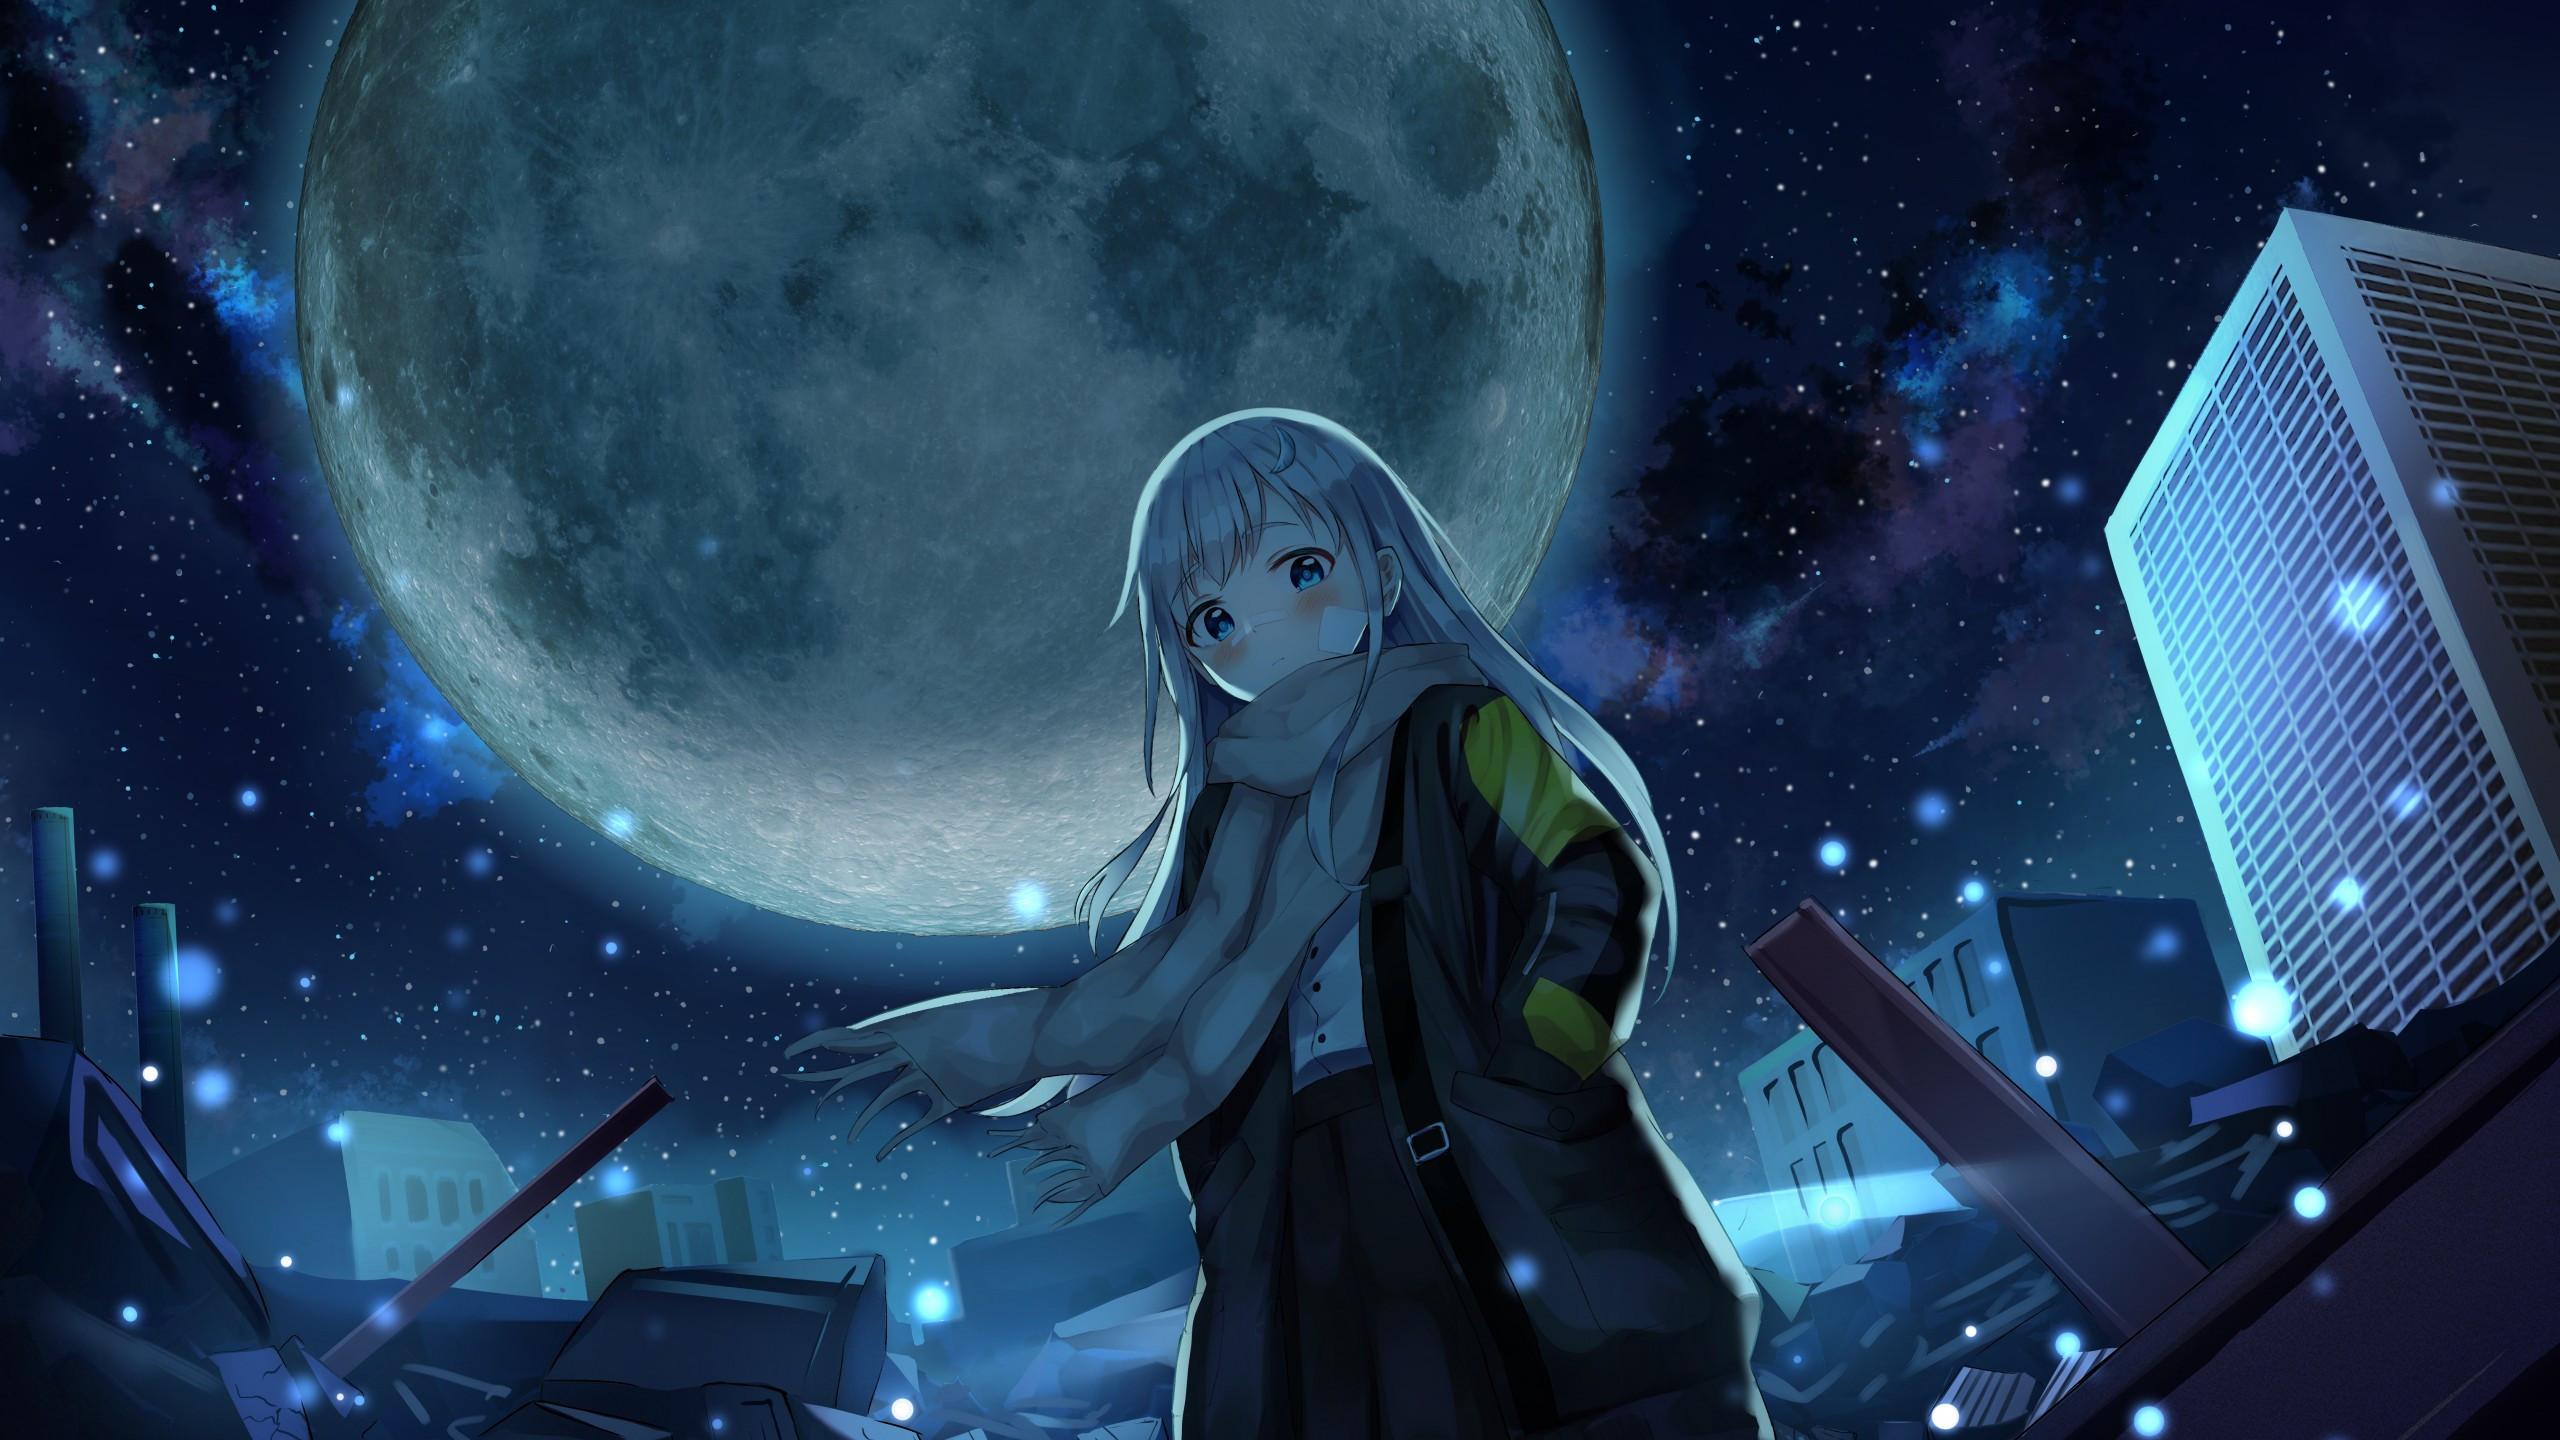 Anime Night Sky Moon Wallpapers - Top Free Anime Night Sky Moon ...